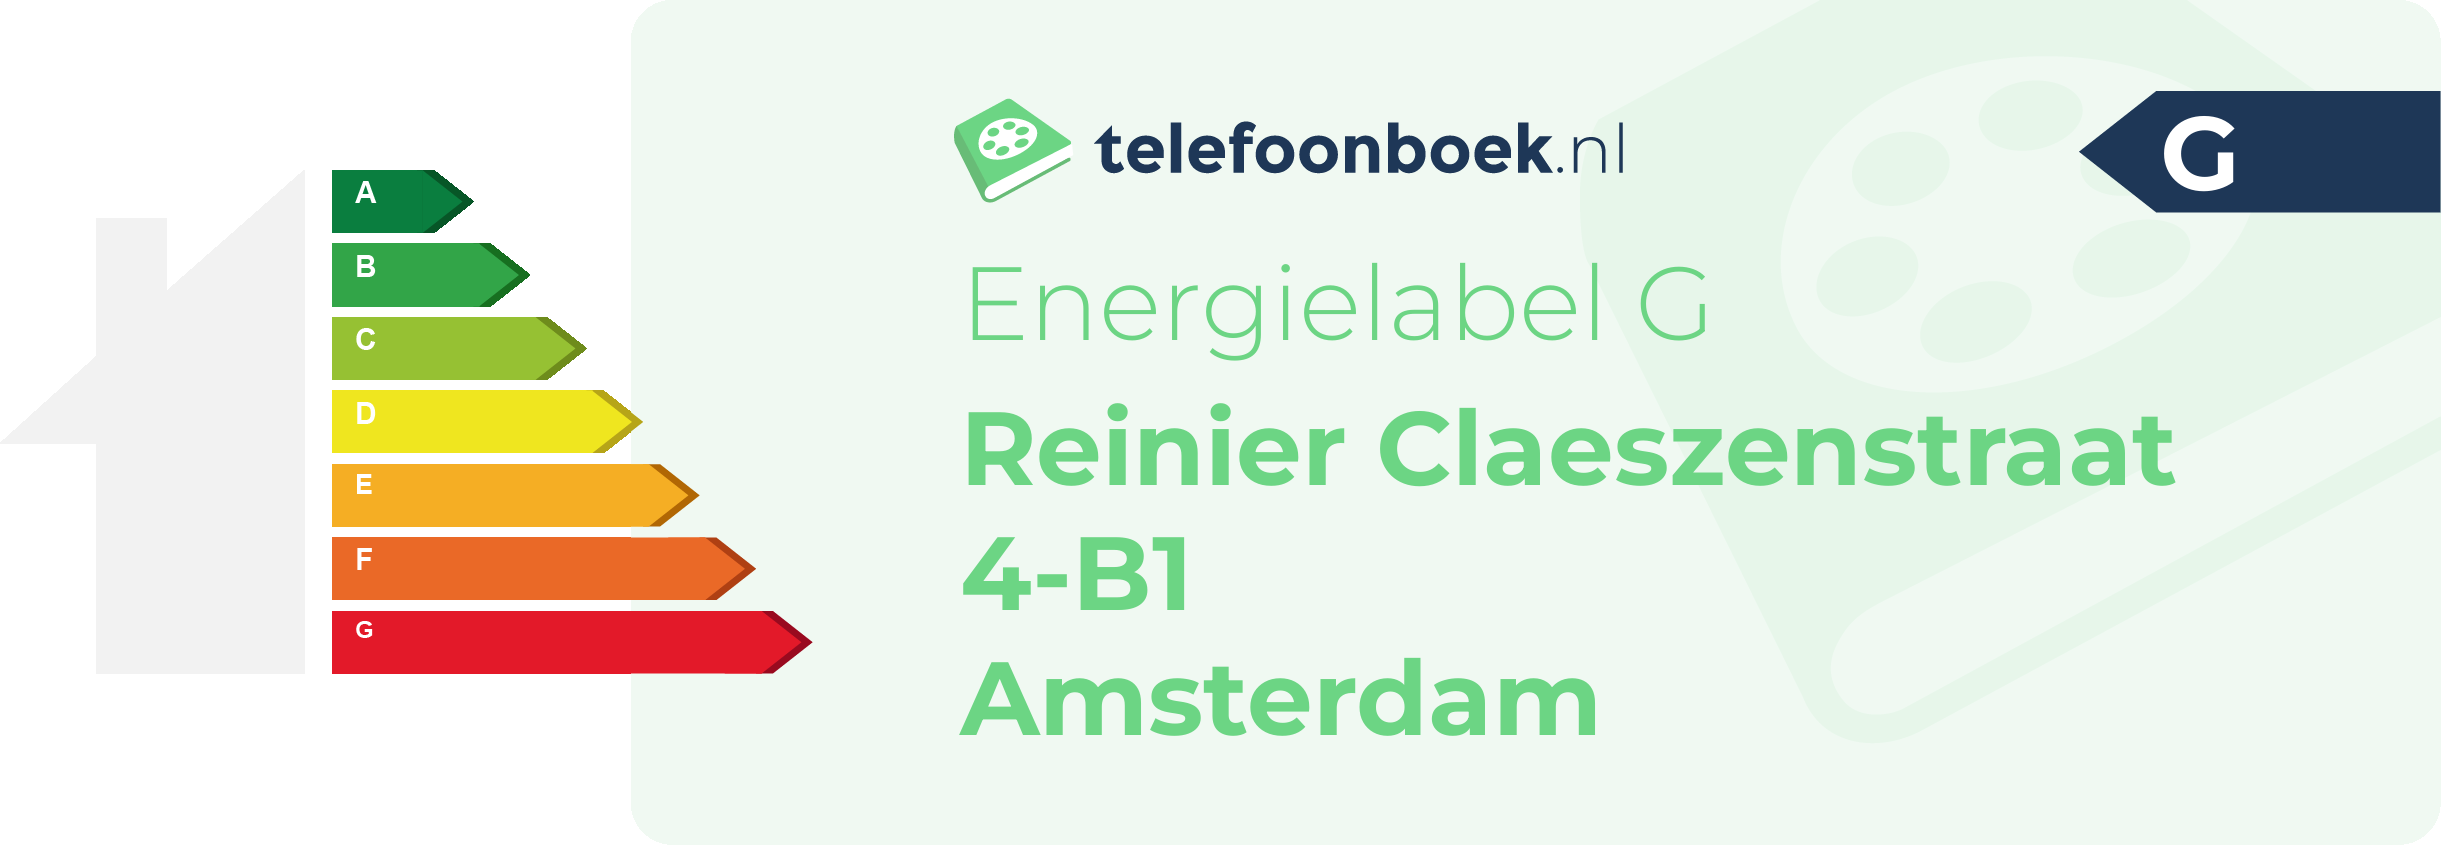 Energielabel Reinier Claeszenstraat 4-B1 Amsterdam